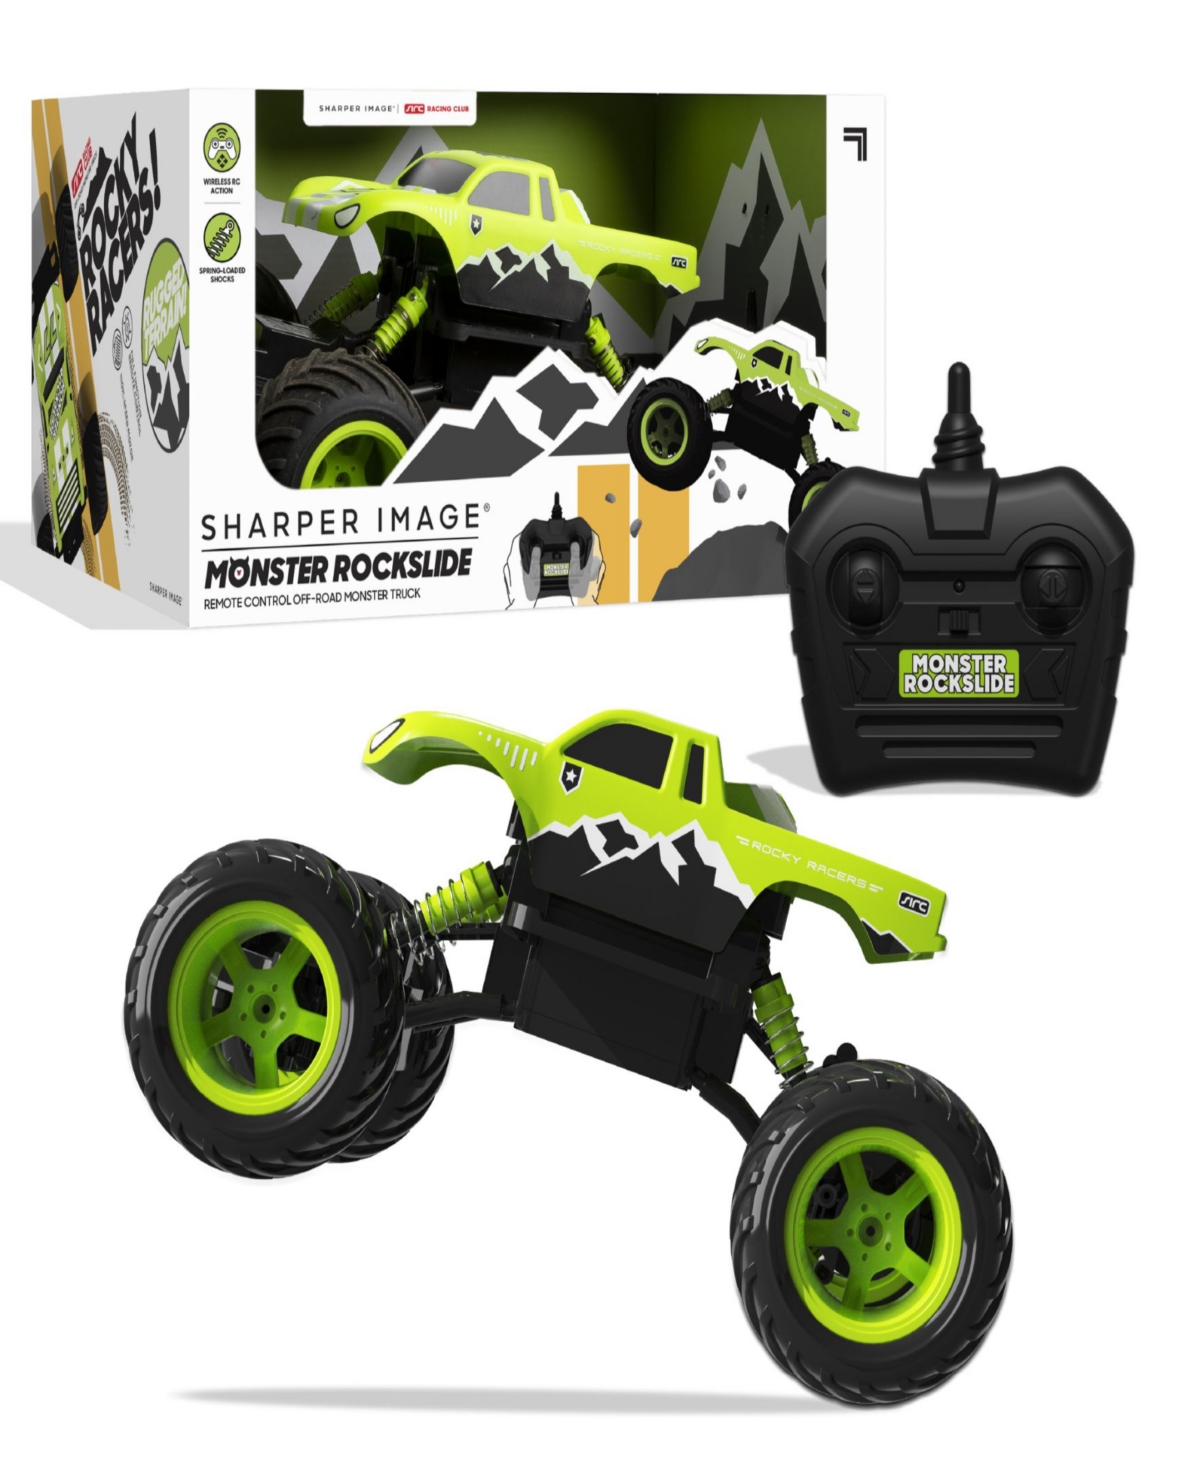 Sharper Image Kids' Toy Rc Monster Rockslide, 2.4 Ghz Off-road Monster Truck In Bright Green